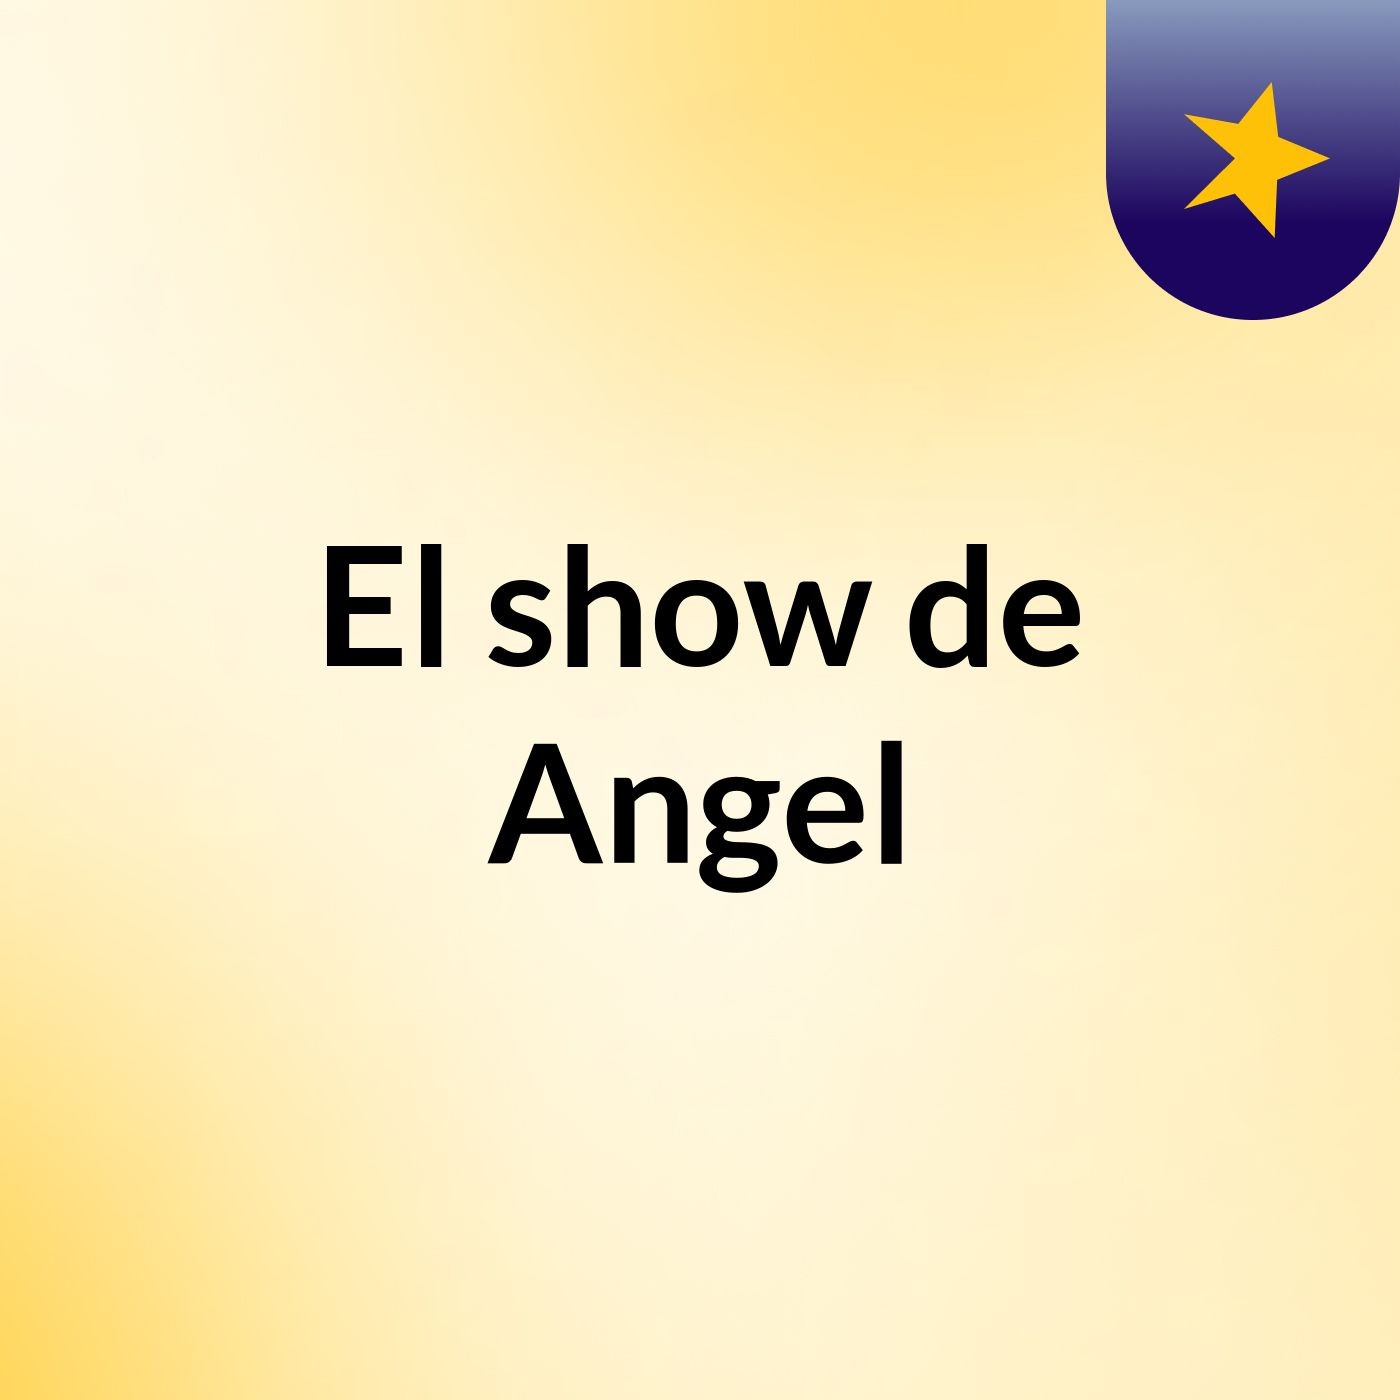 El show de Angel